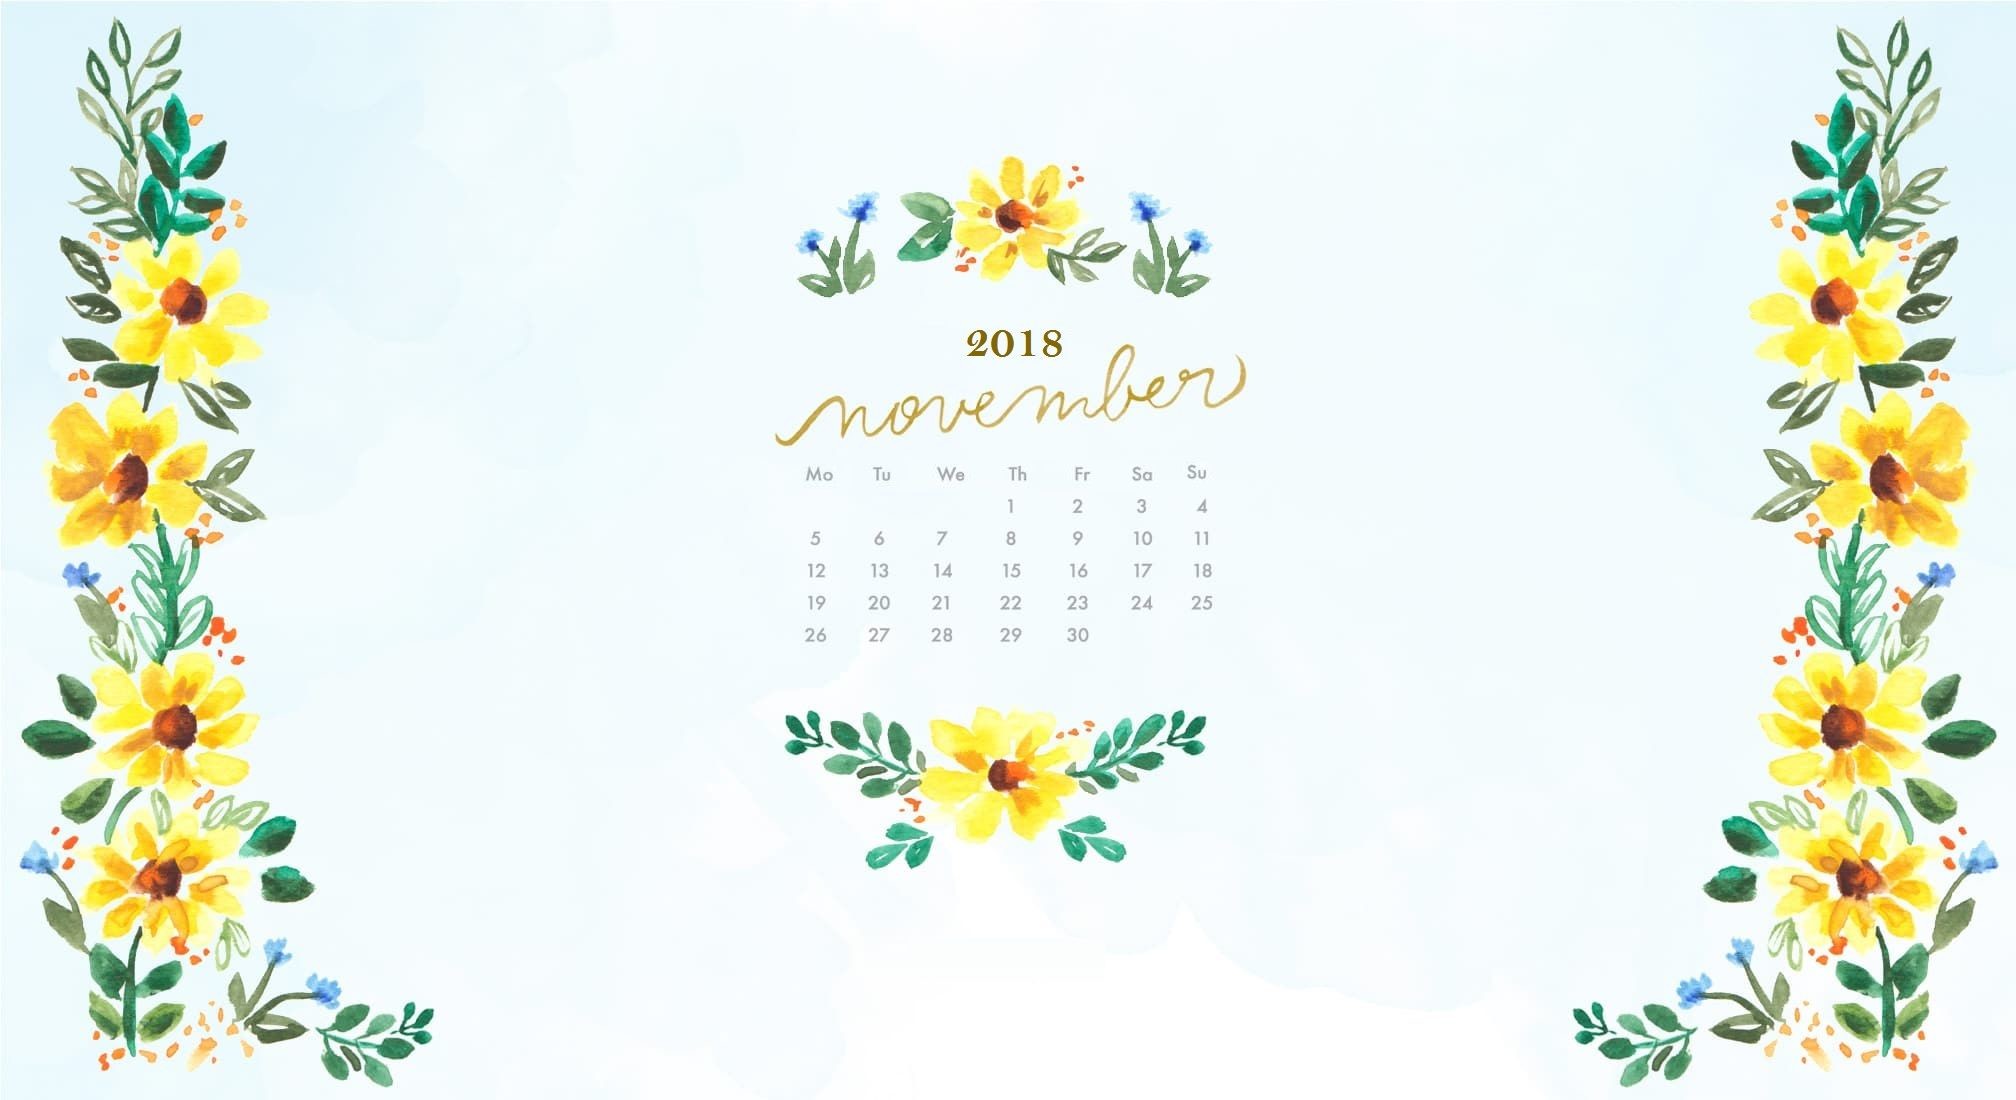 2016x1100 Nov 2018 Calendar Wallpapers For Smartphones, iPhone, Smart Gadgets Free  Download High Definition November | MaxCalendars | Pinterest | Calendar  wallpaper, ...